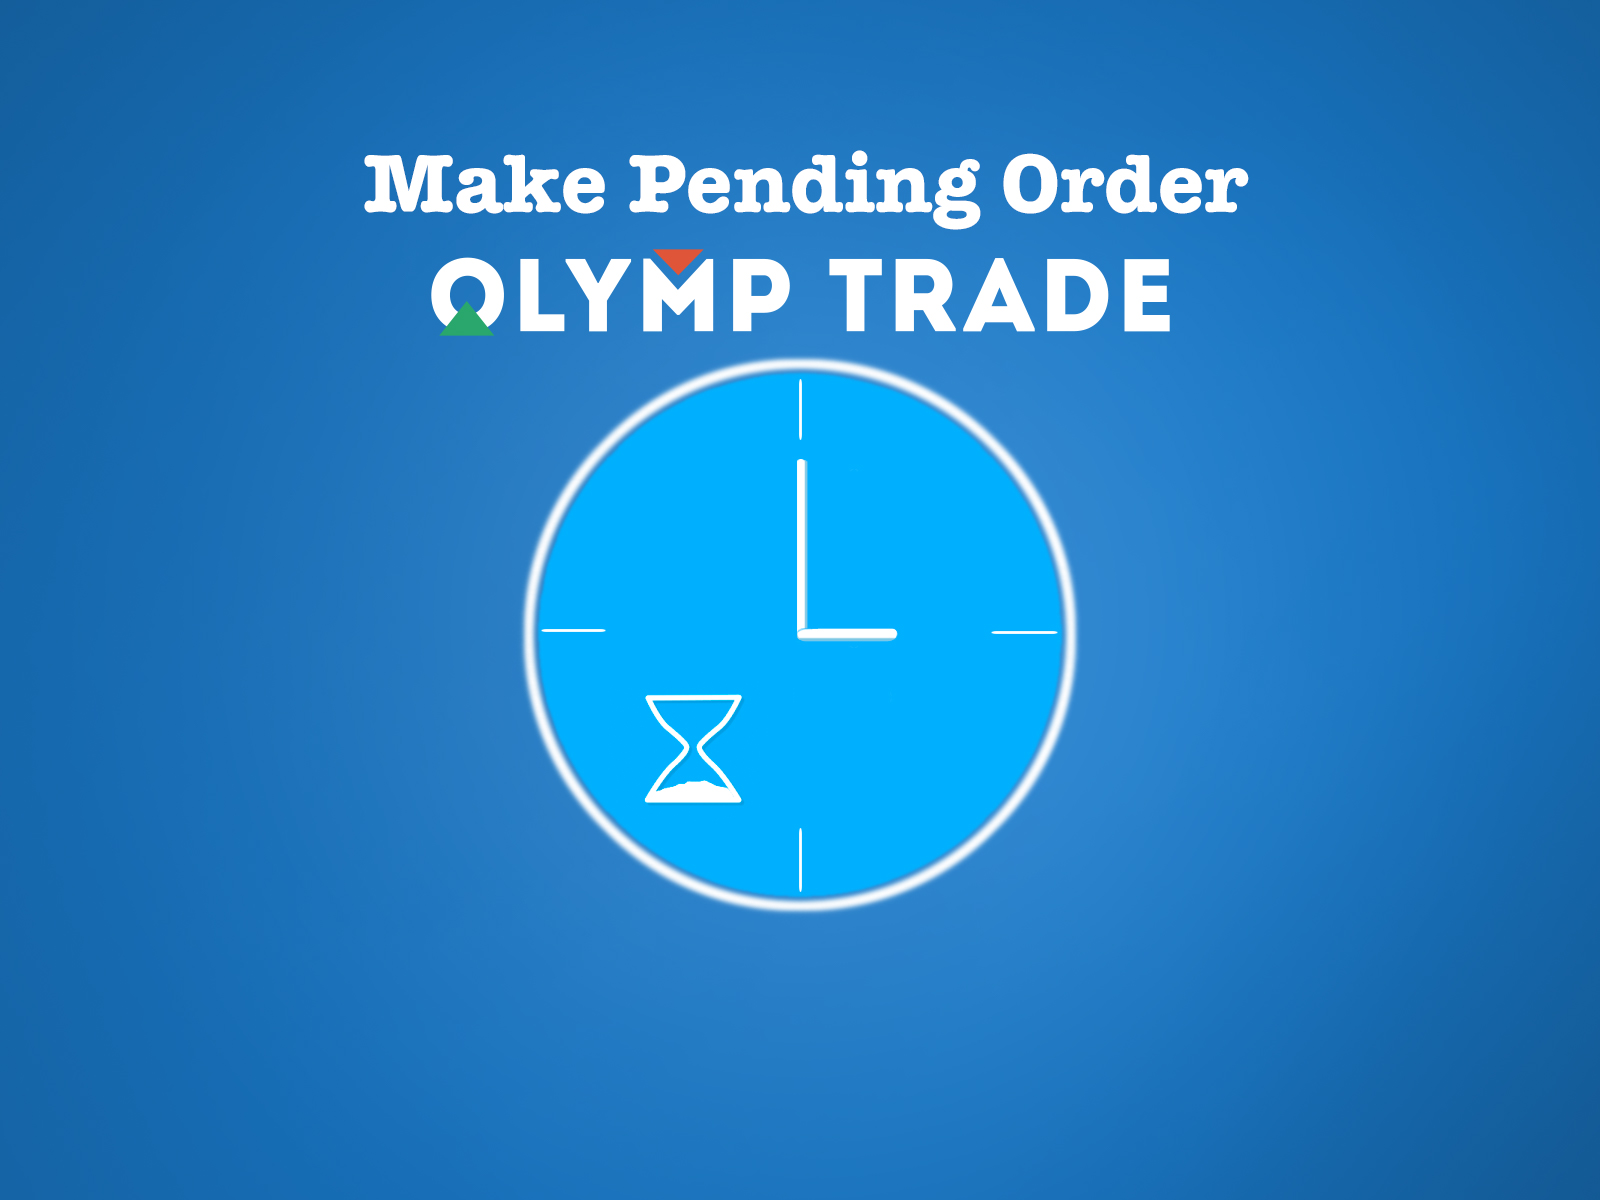 Olymp trade reddit